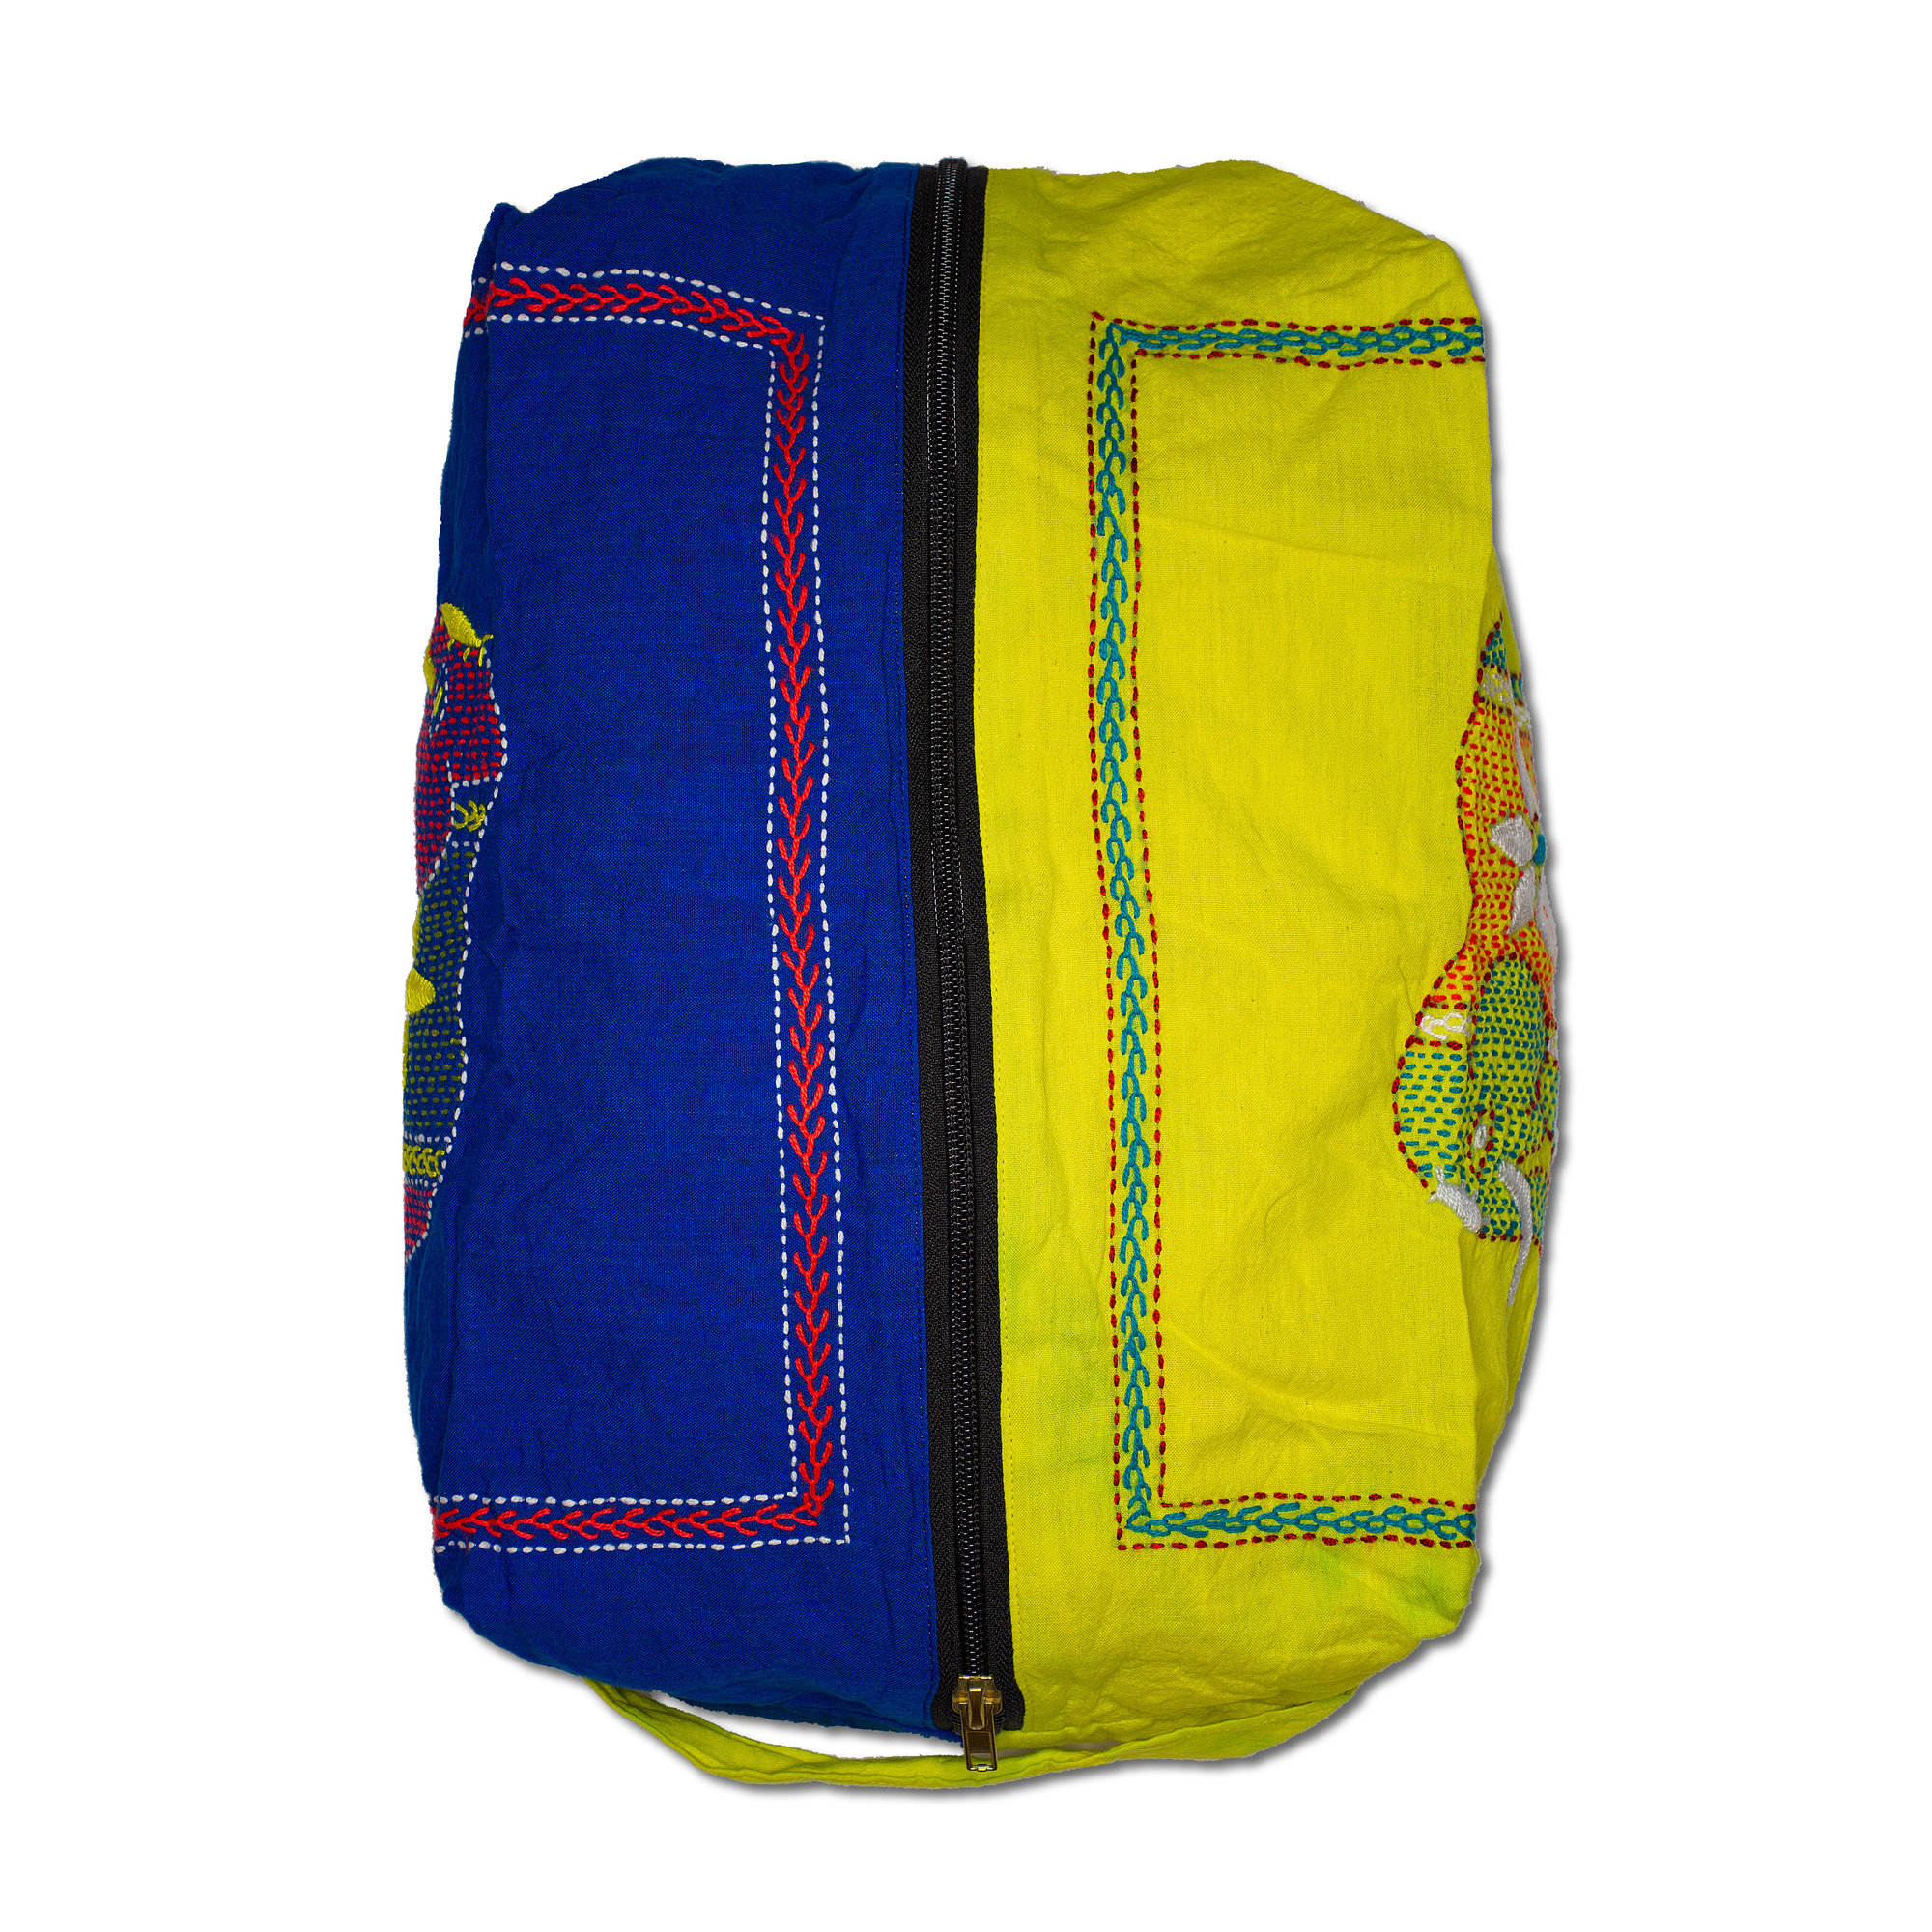 Pouch Bag - Dinajpur (elephant) Design In Suraiya (dark Blue) And Asha (yellow)